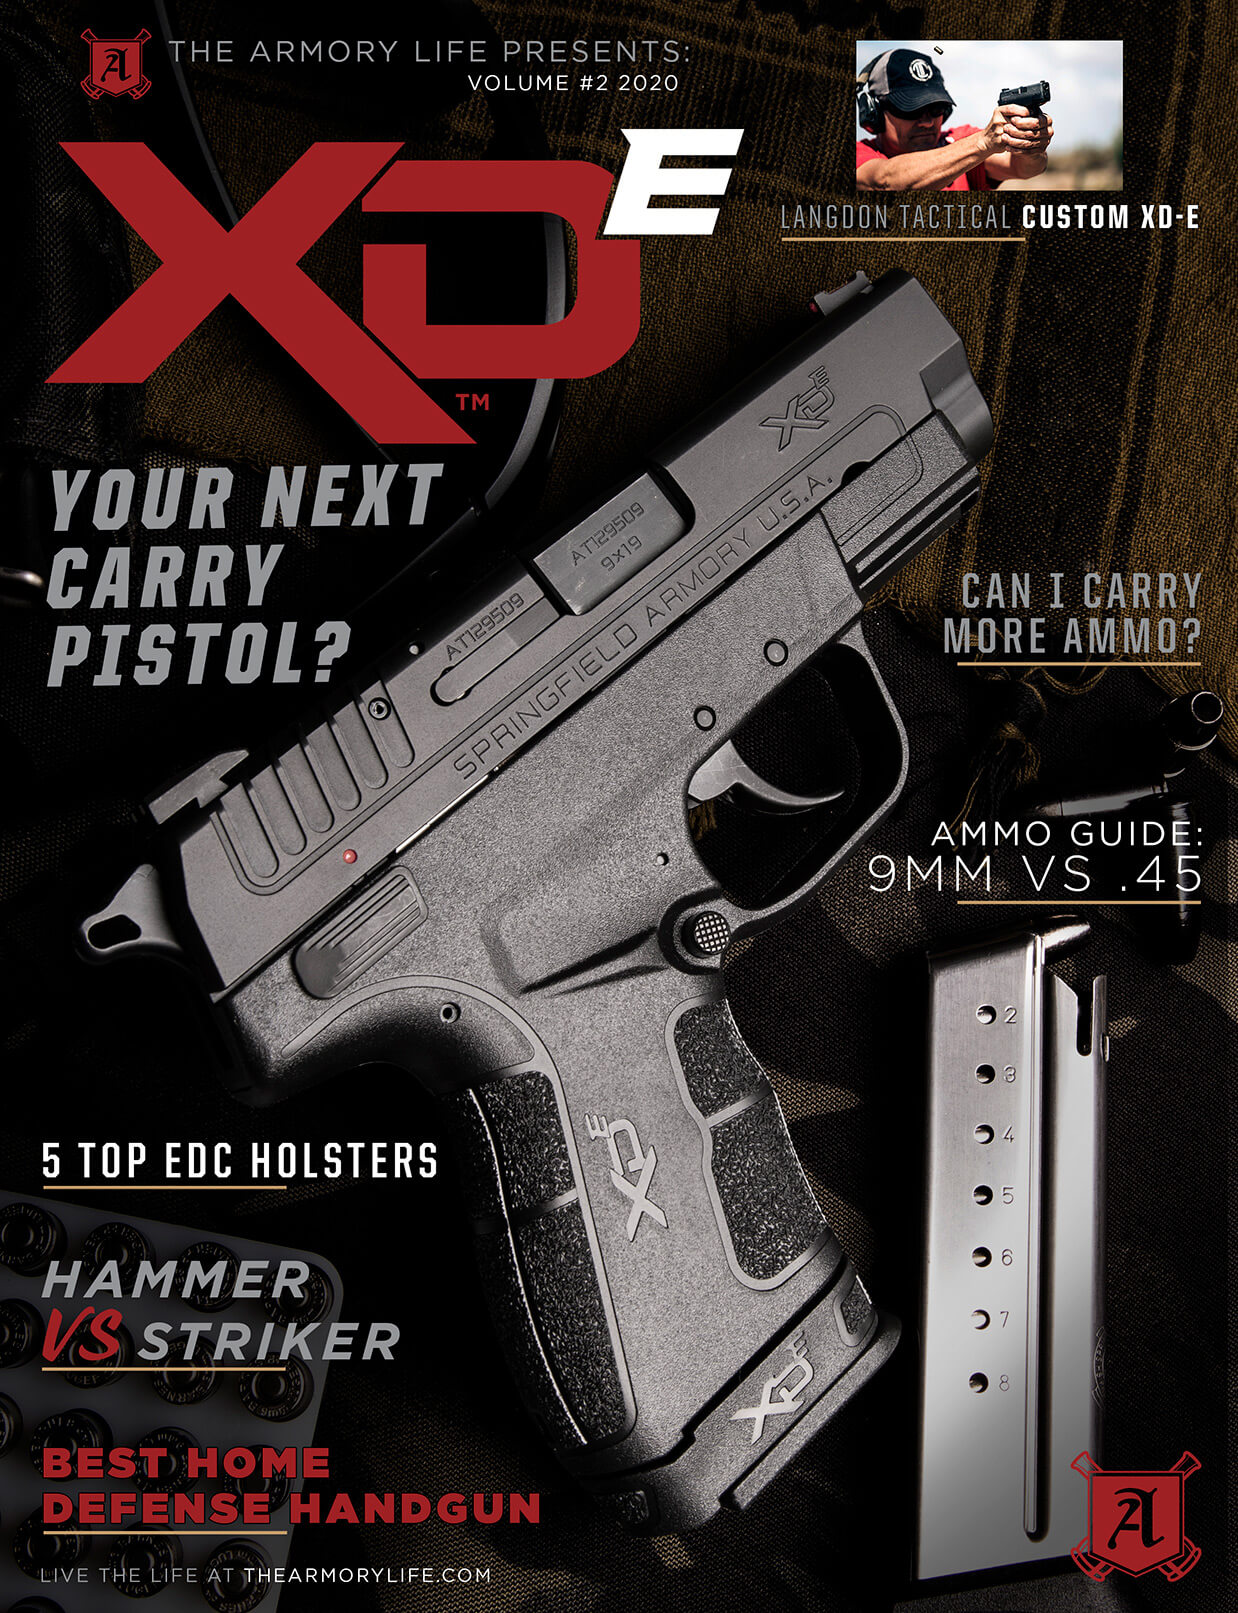 Cover for The Armory Life Digital Magazine Volume 2: XD-E